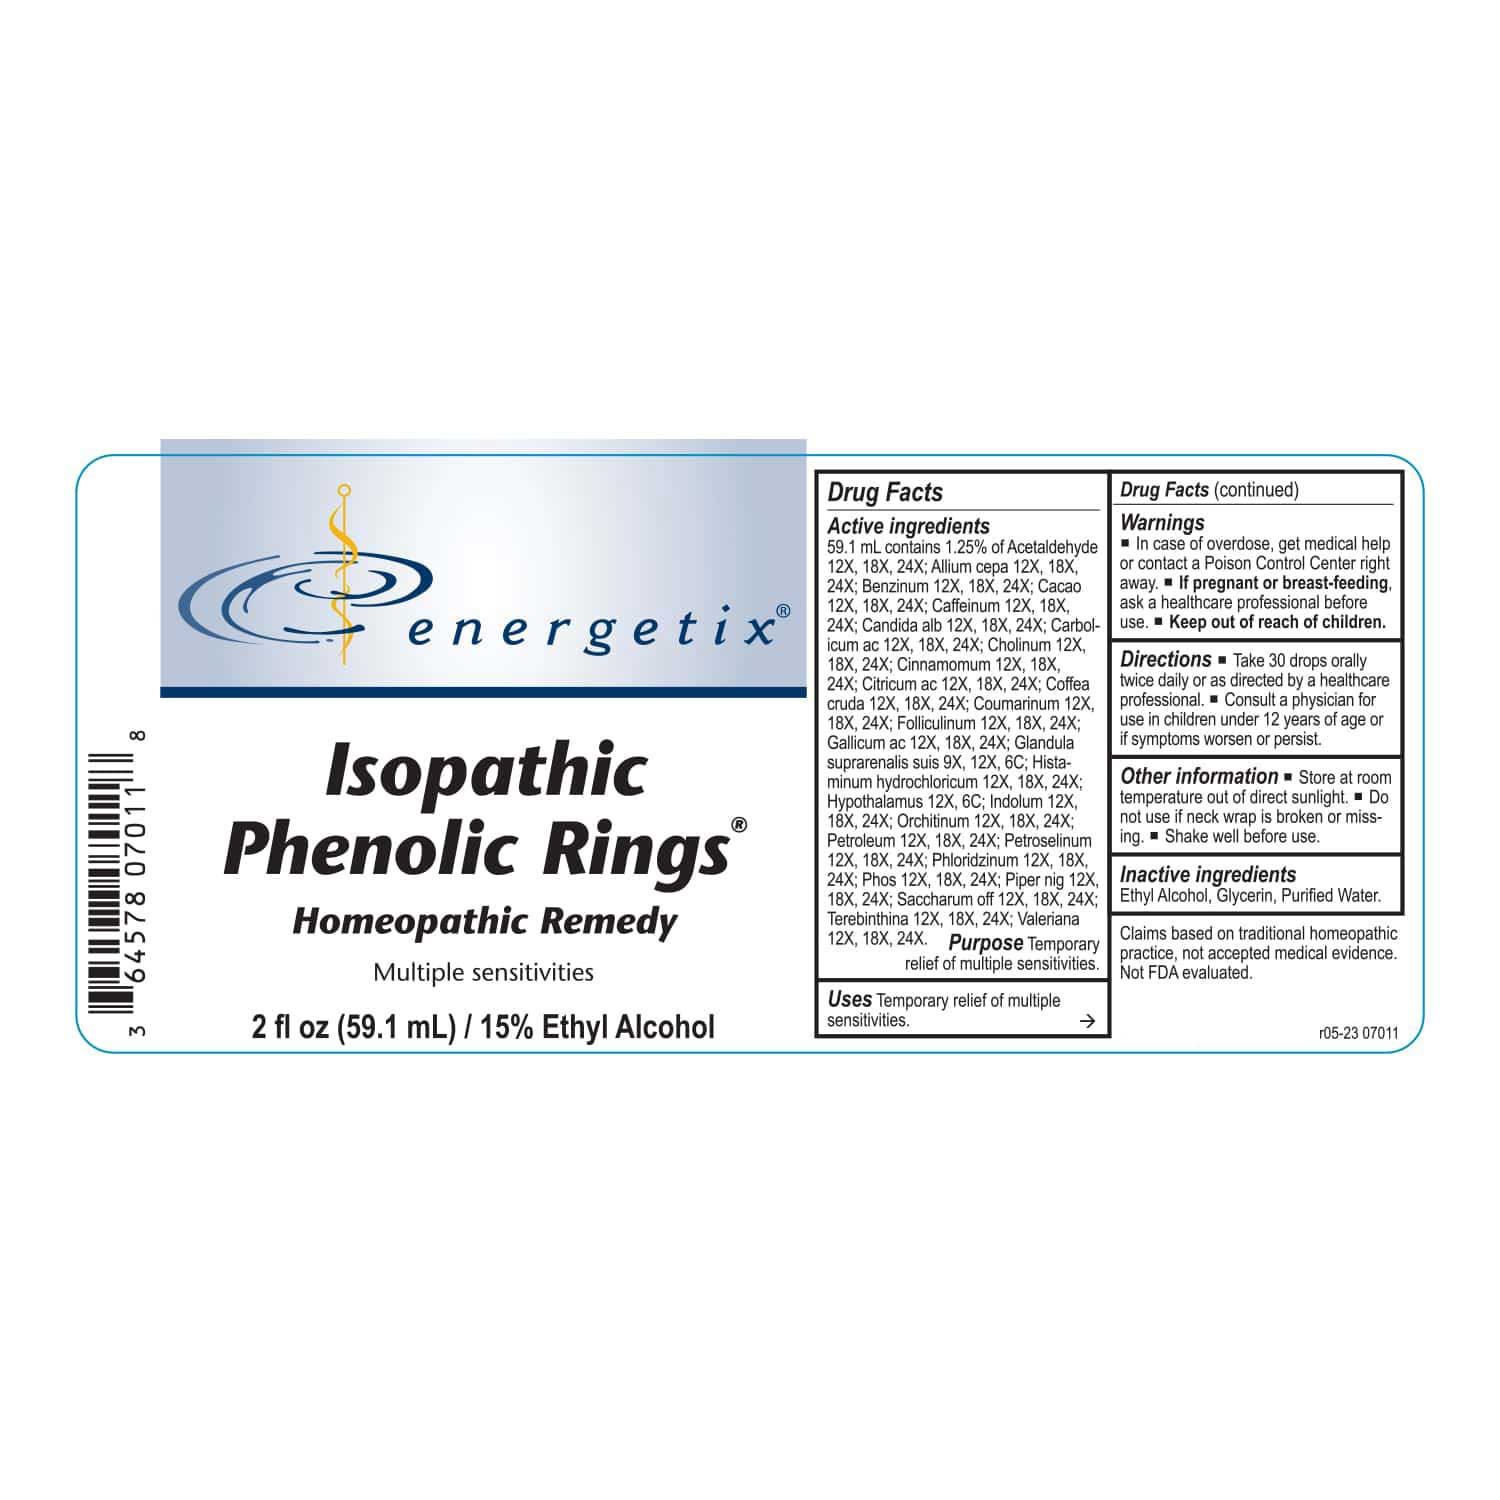 Energetix Isopathic Phenolic Rings Label